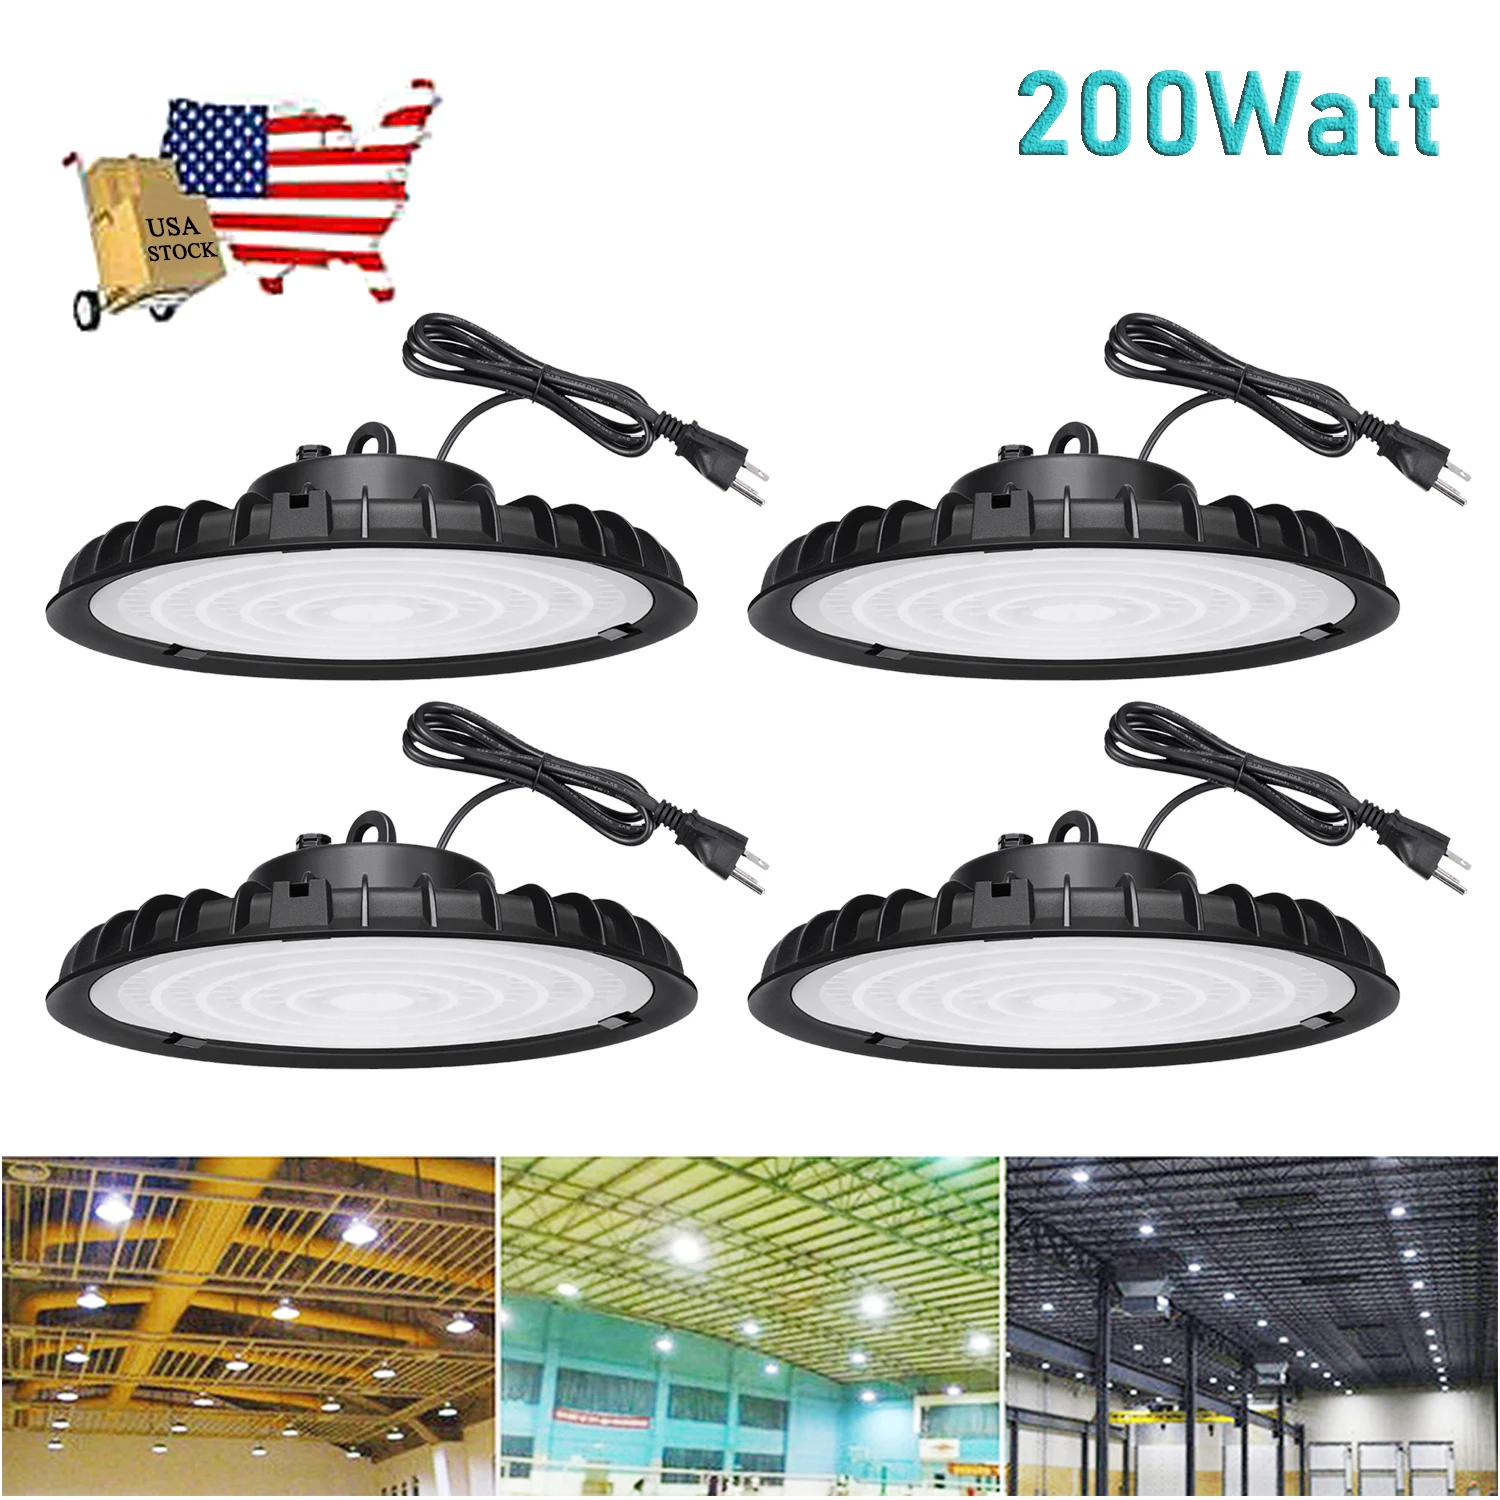 4 Pack 200W UFO Led High Bay Light 6000K Warehouse Workshop Garage Light Fixture Waterproof Commercial Industrial Lamp 110V